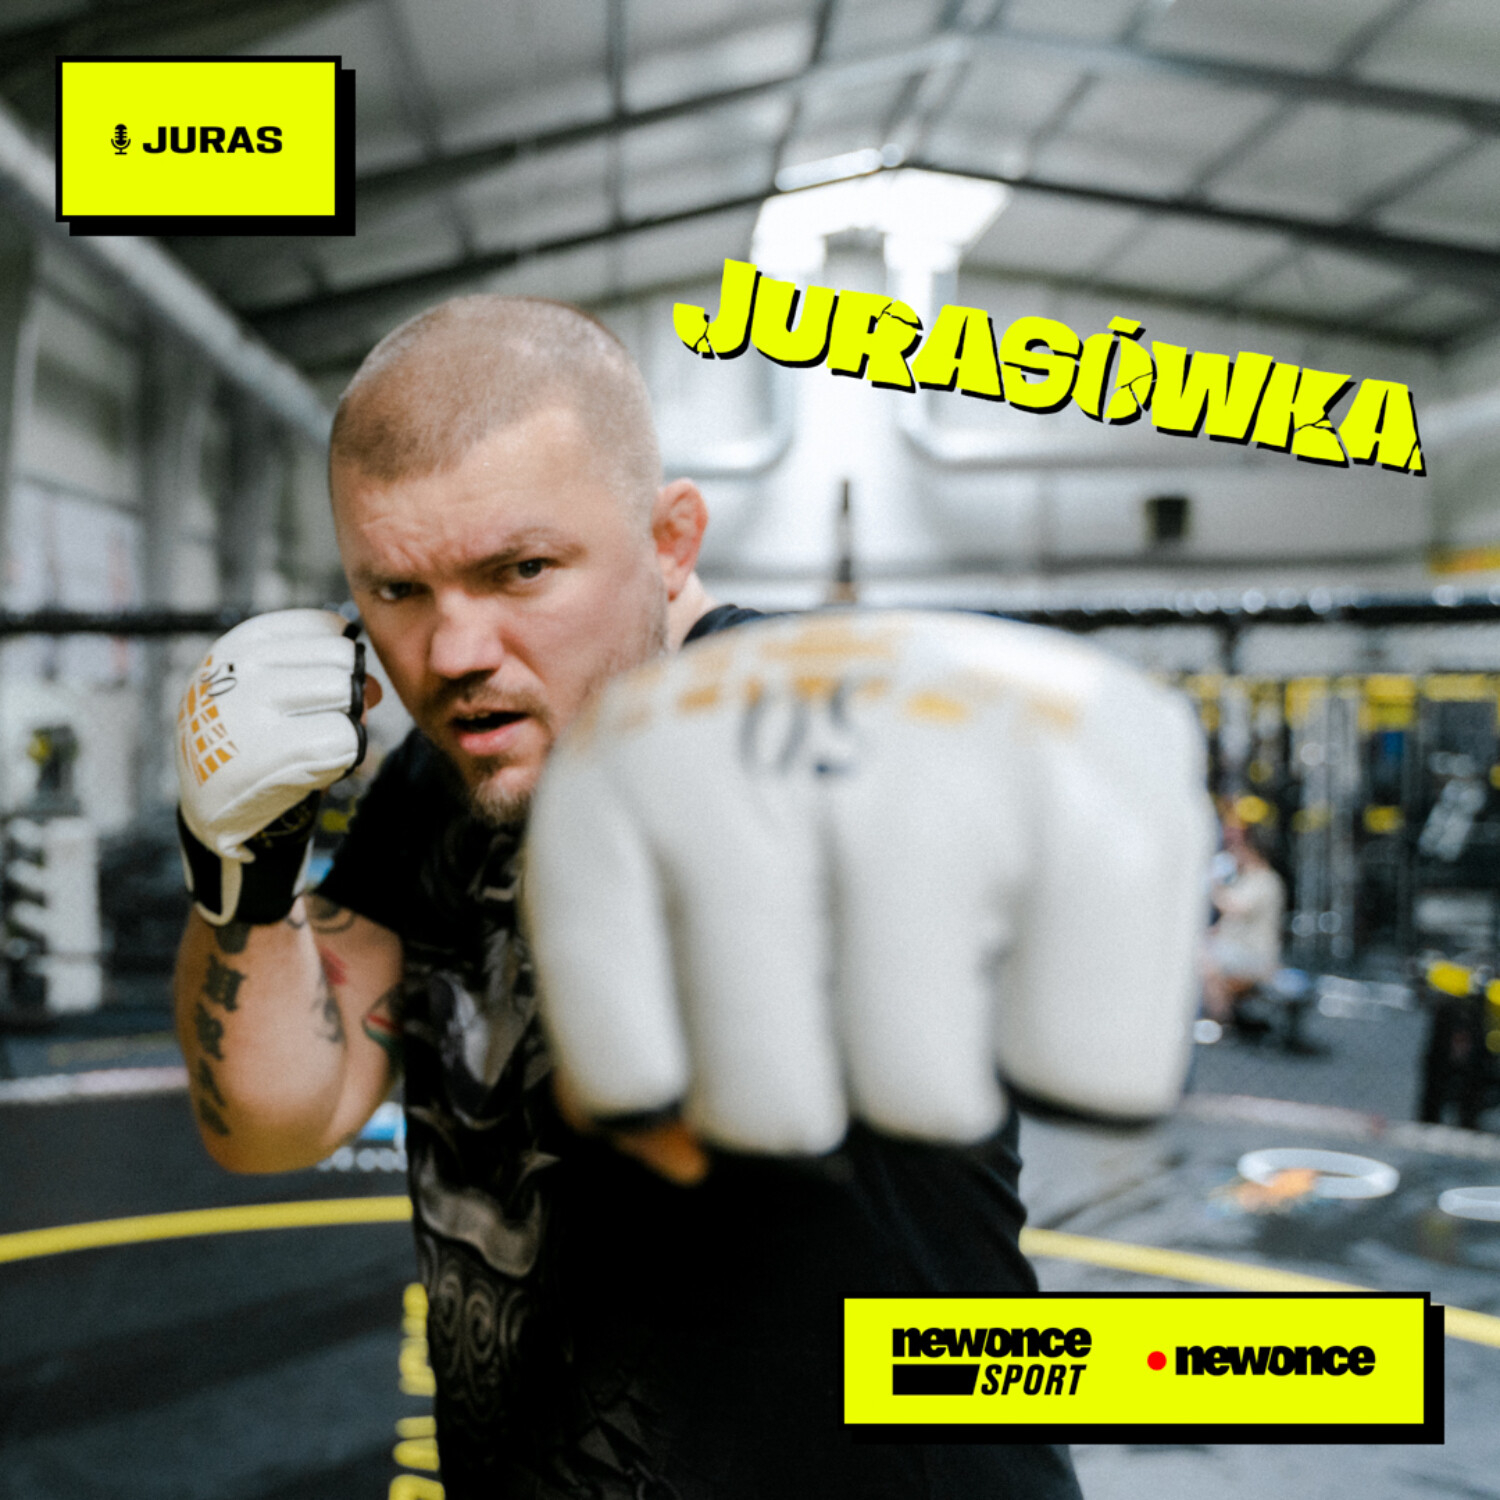 Podcast Jurasówka [Łukasz "Juras" Jurkowski]